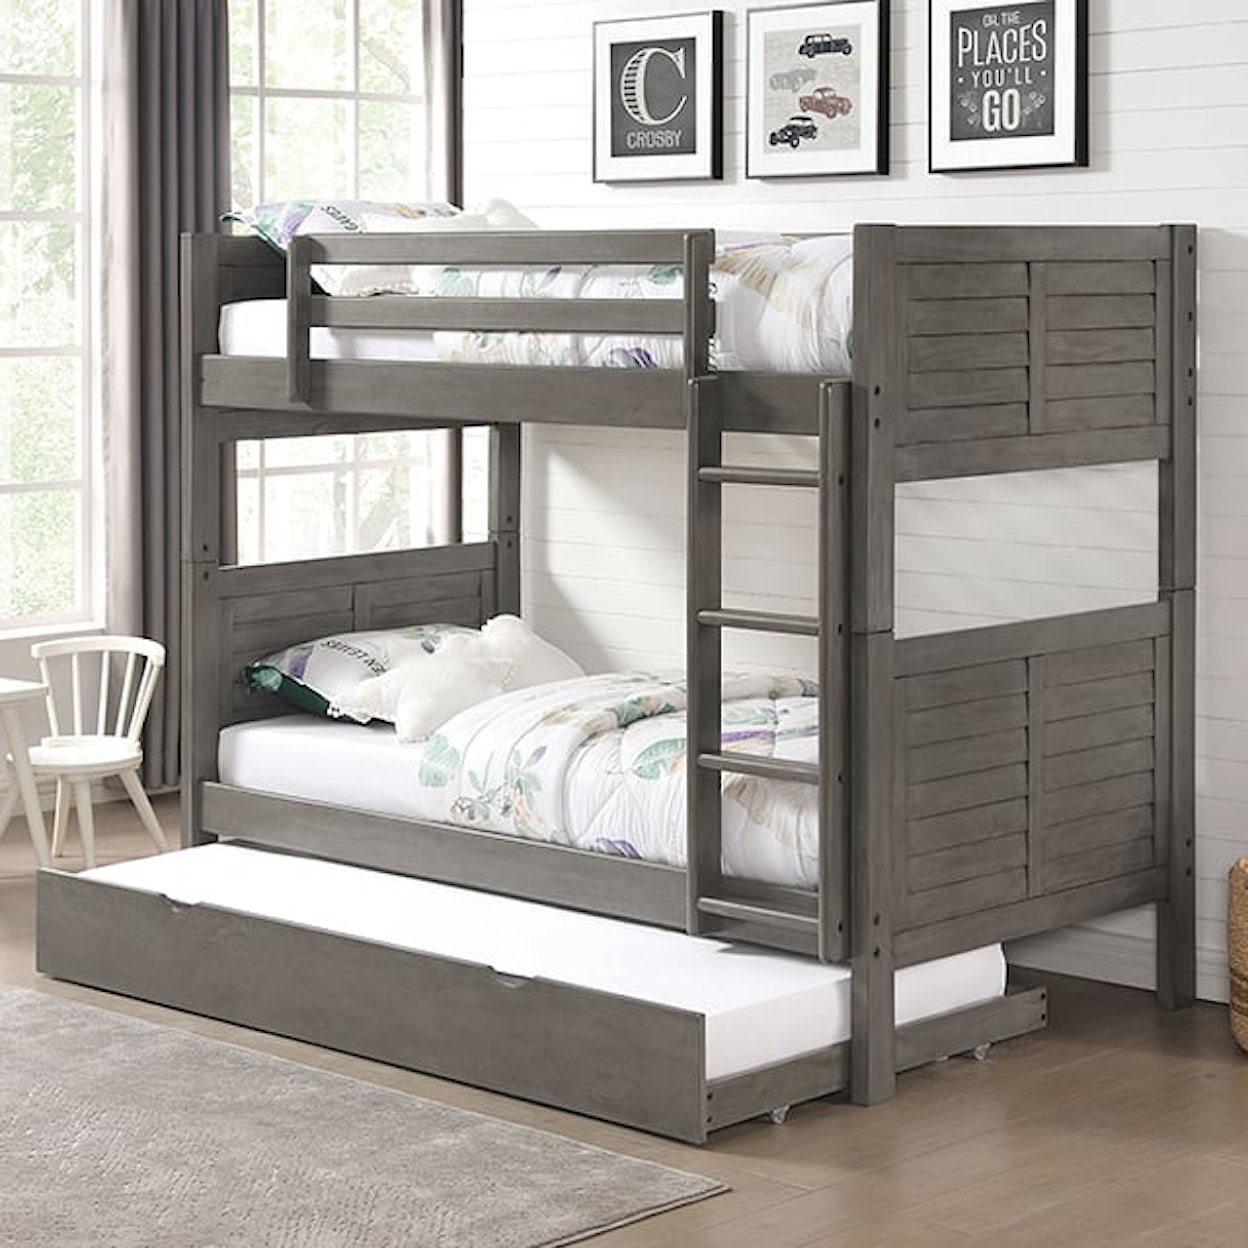 Furniture of America Hoople Twin/Full Bunk Bed